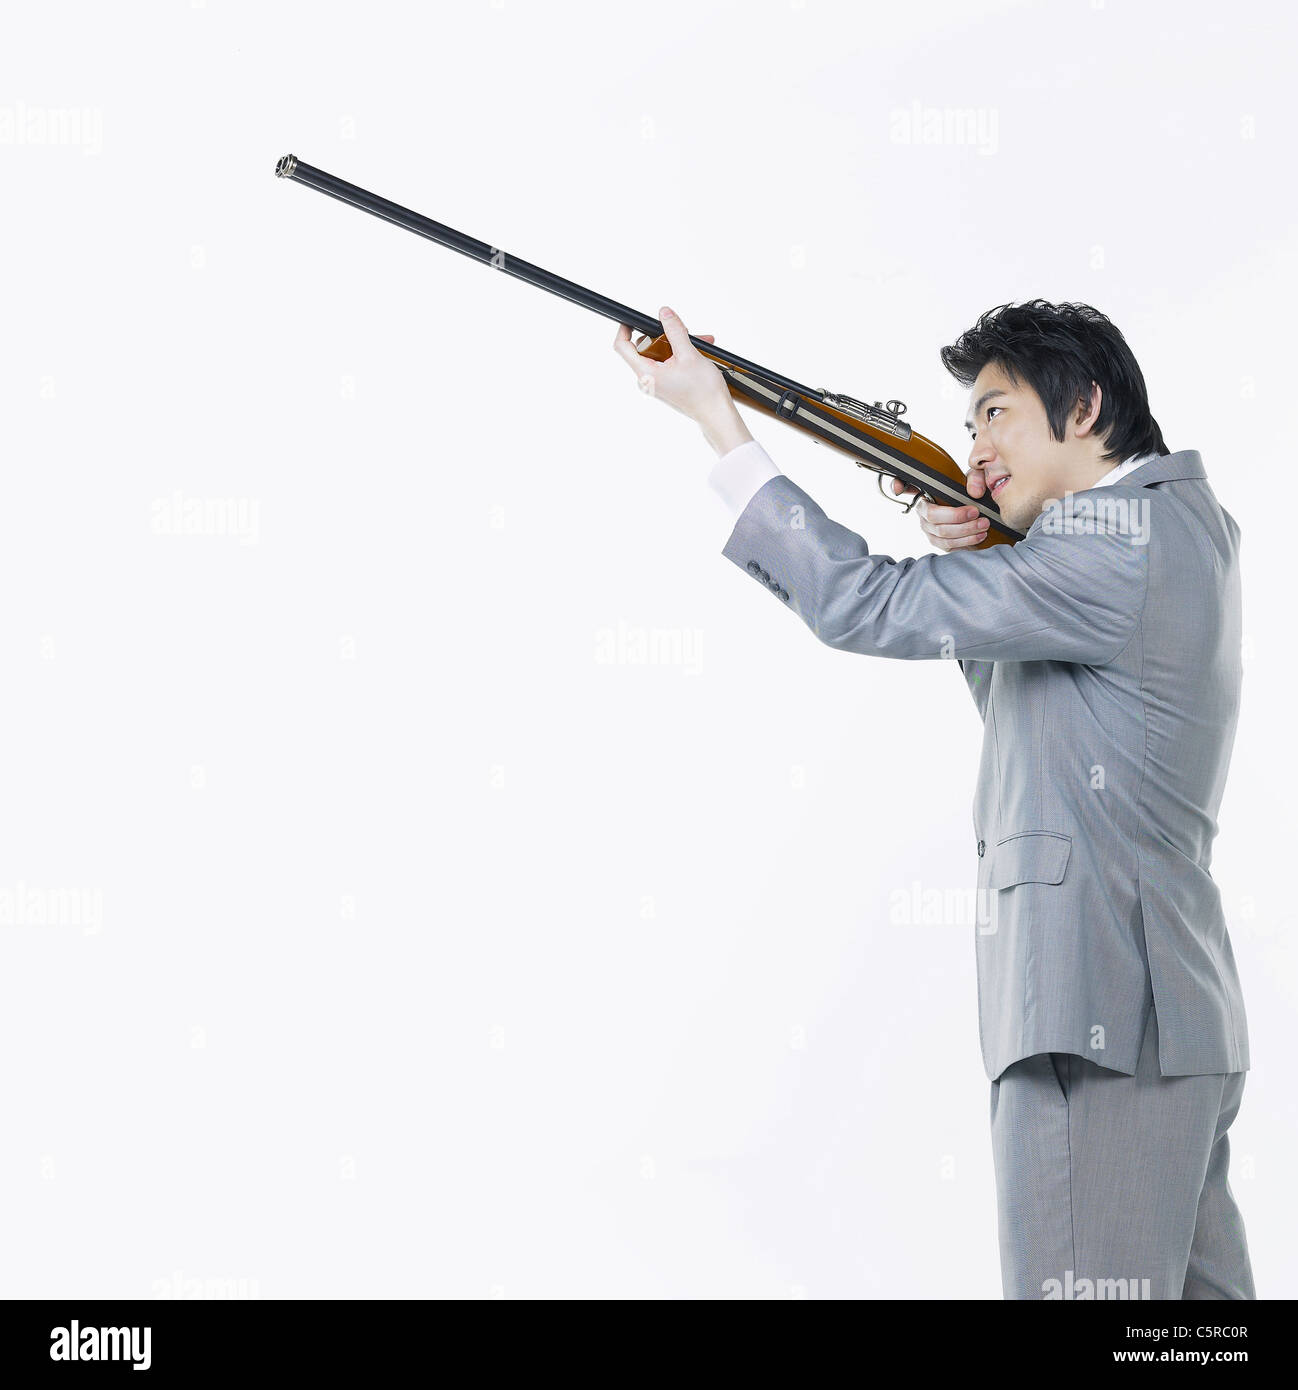 A man aiming with a shotgun Stock Photo